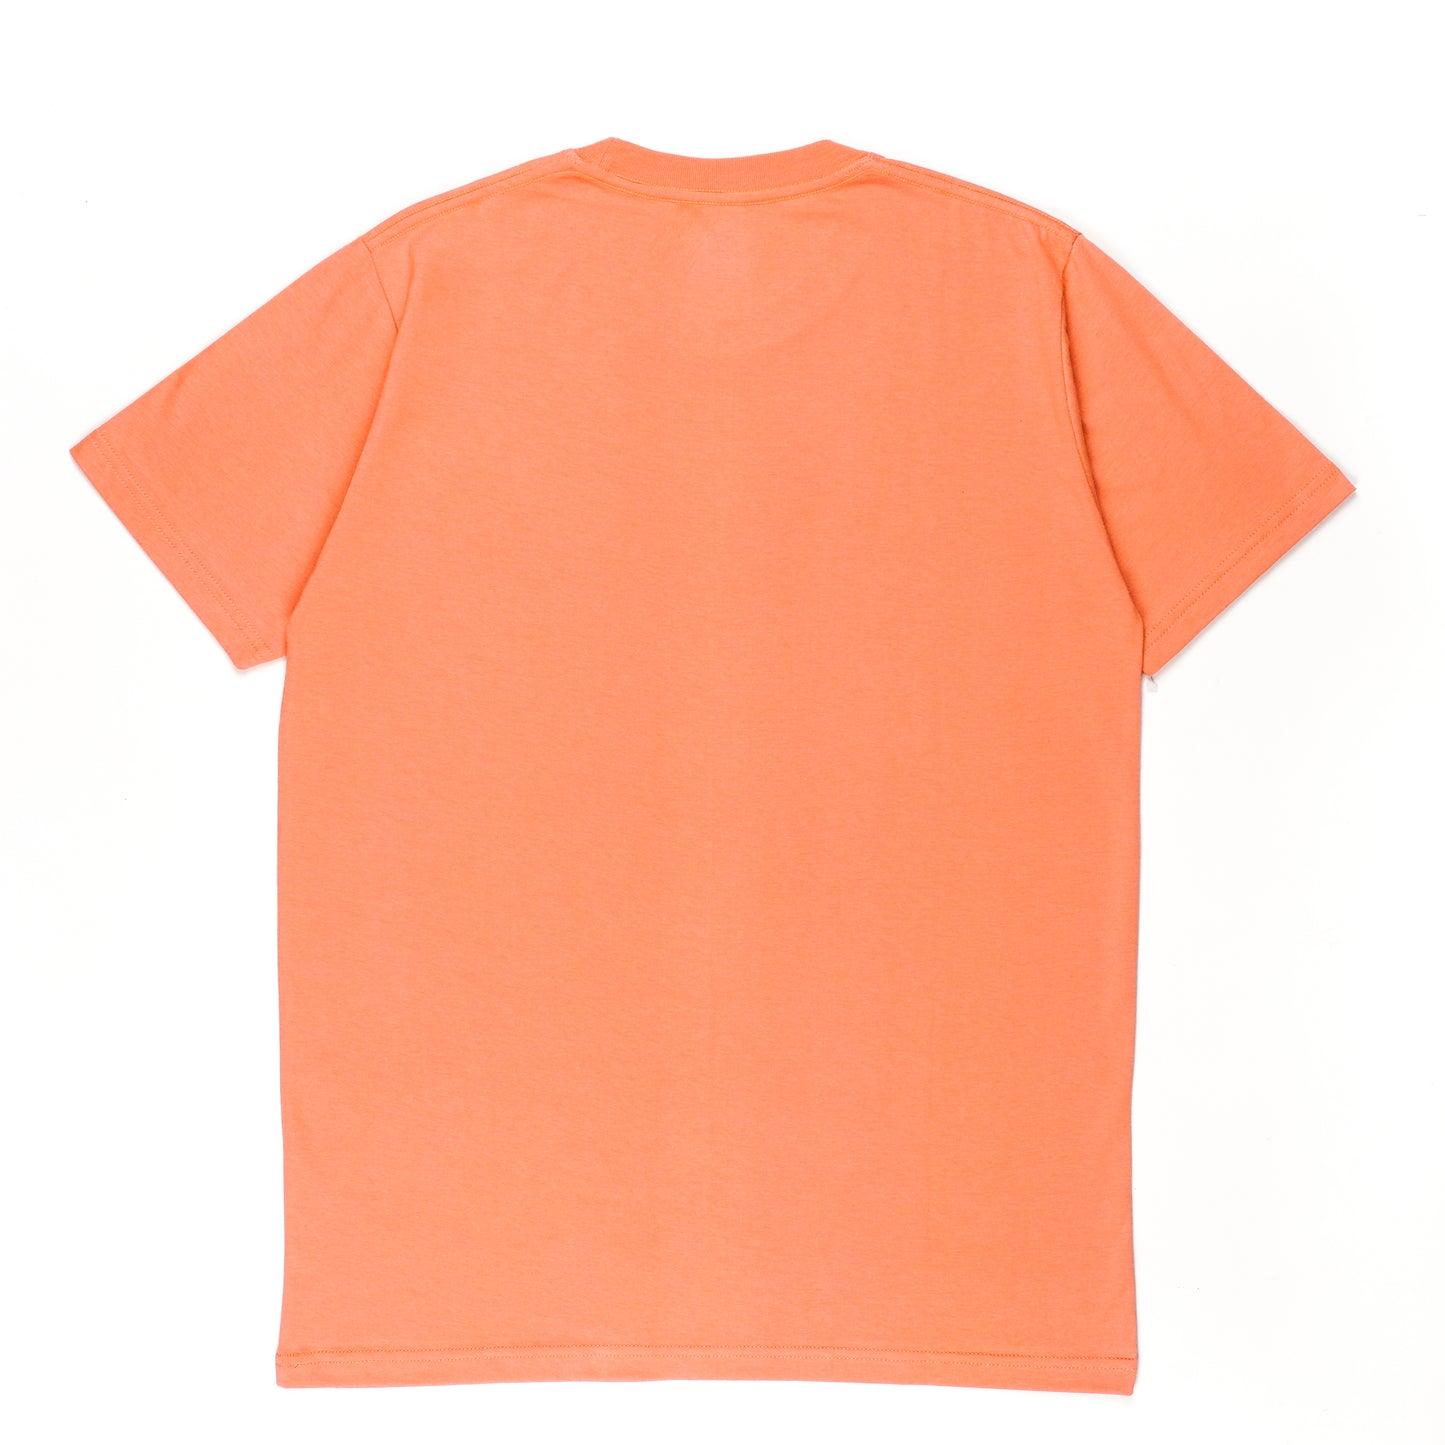 AZA T-Shirt Pro Basic Edition - Dusty Peach